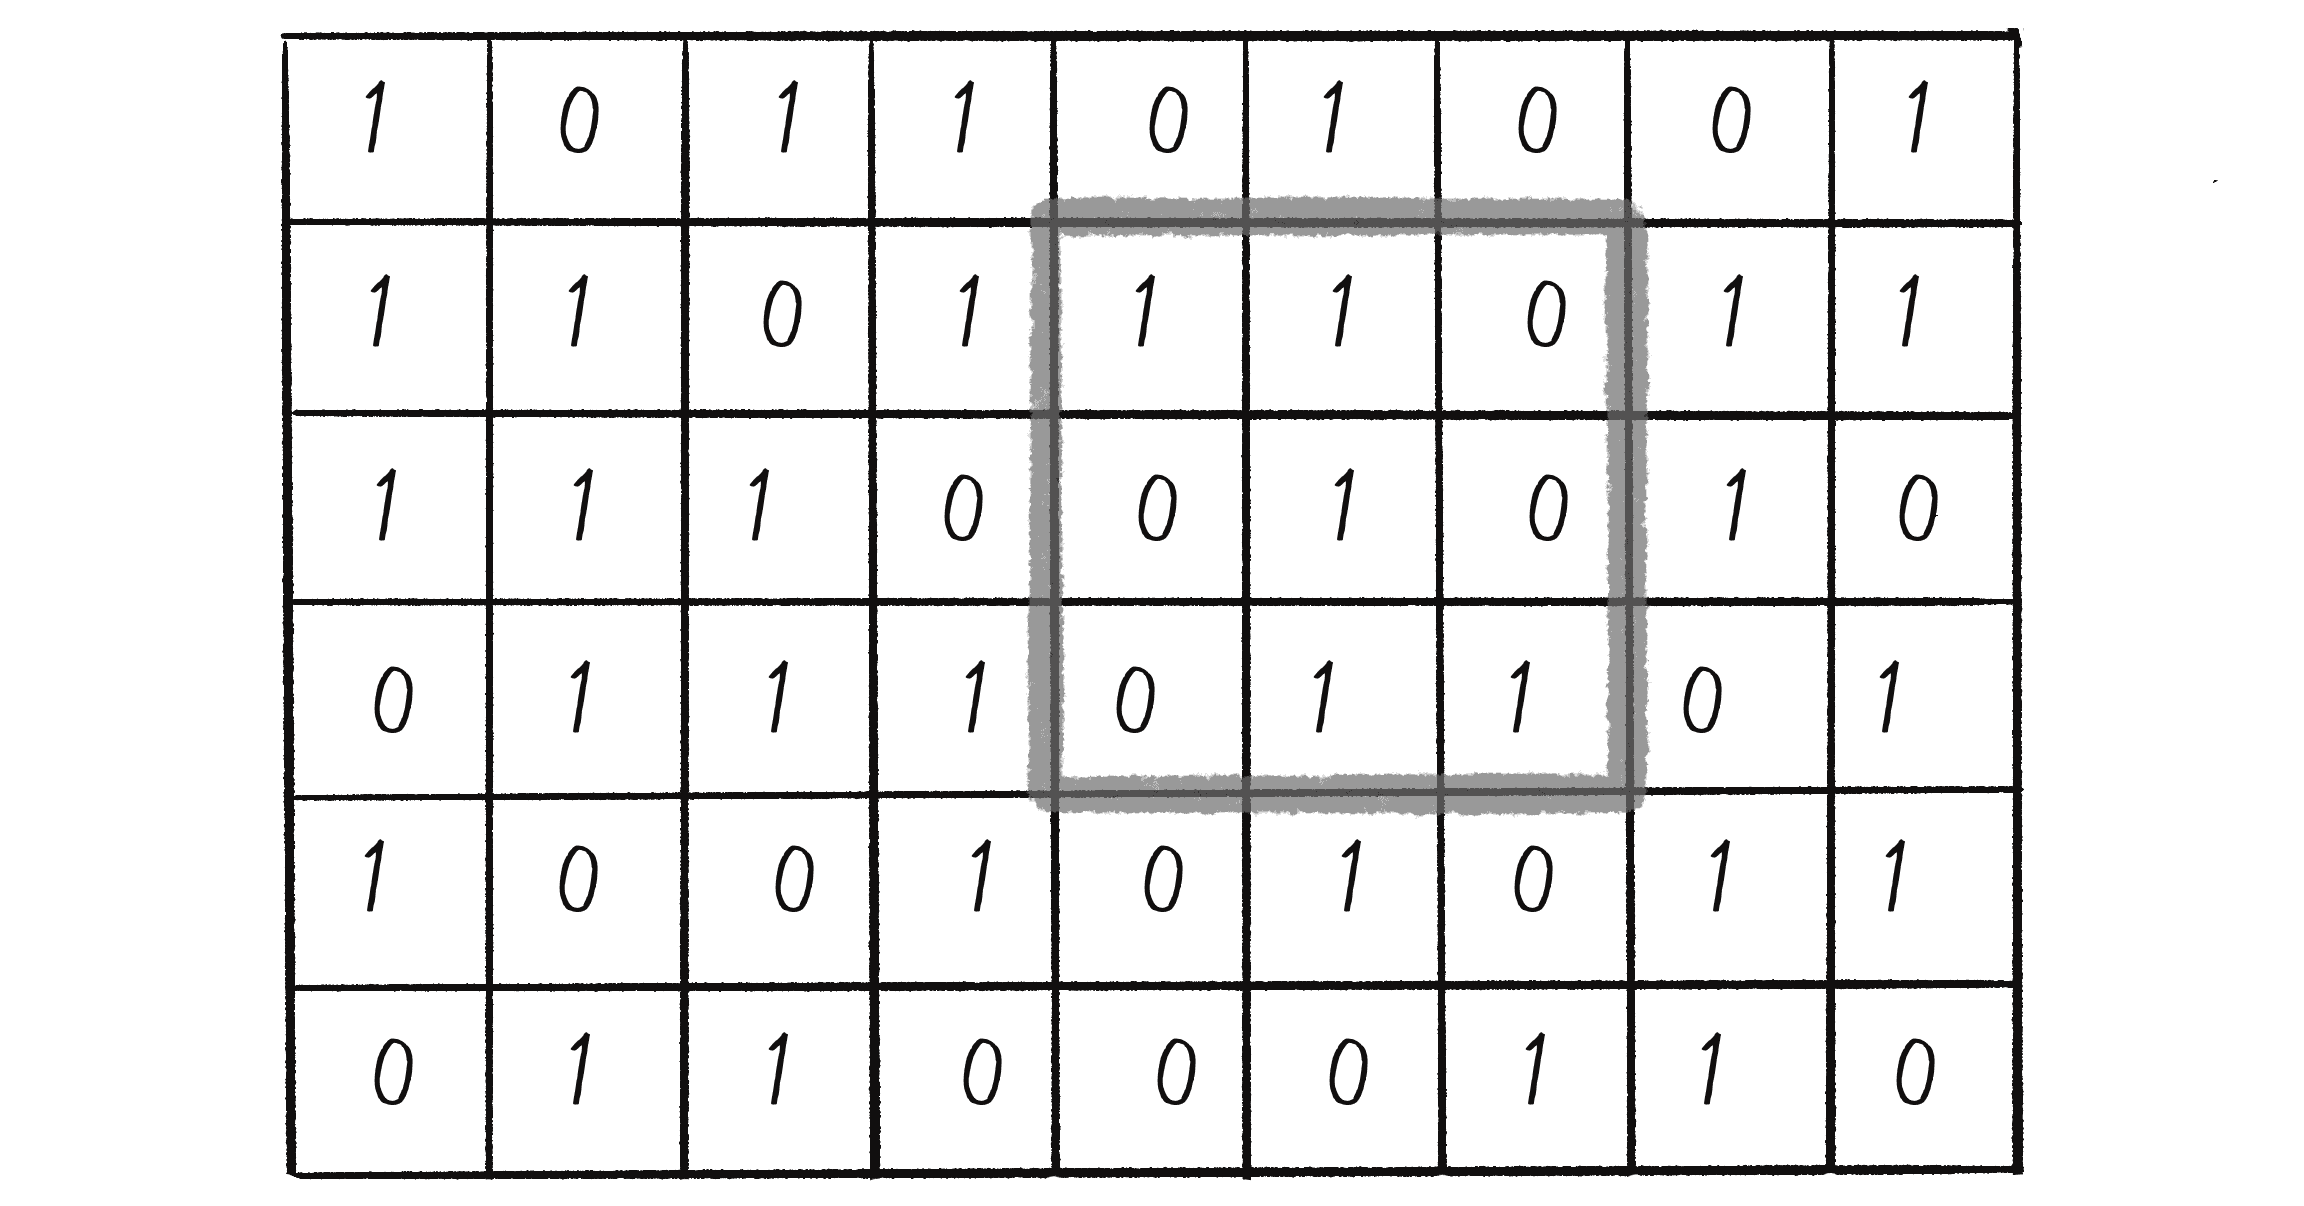 Figure 7.26: A 2D CA showing the neighborhood of nine cells